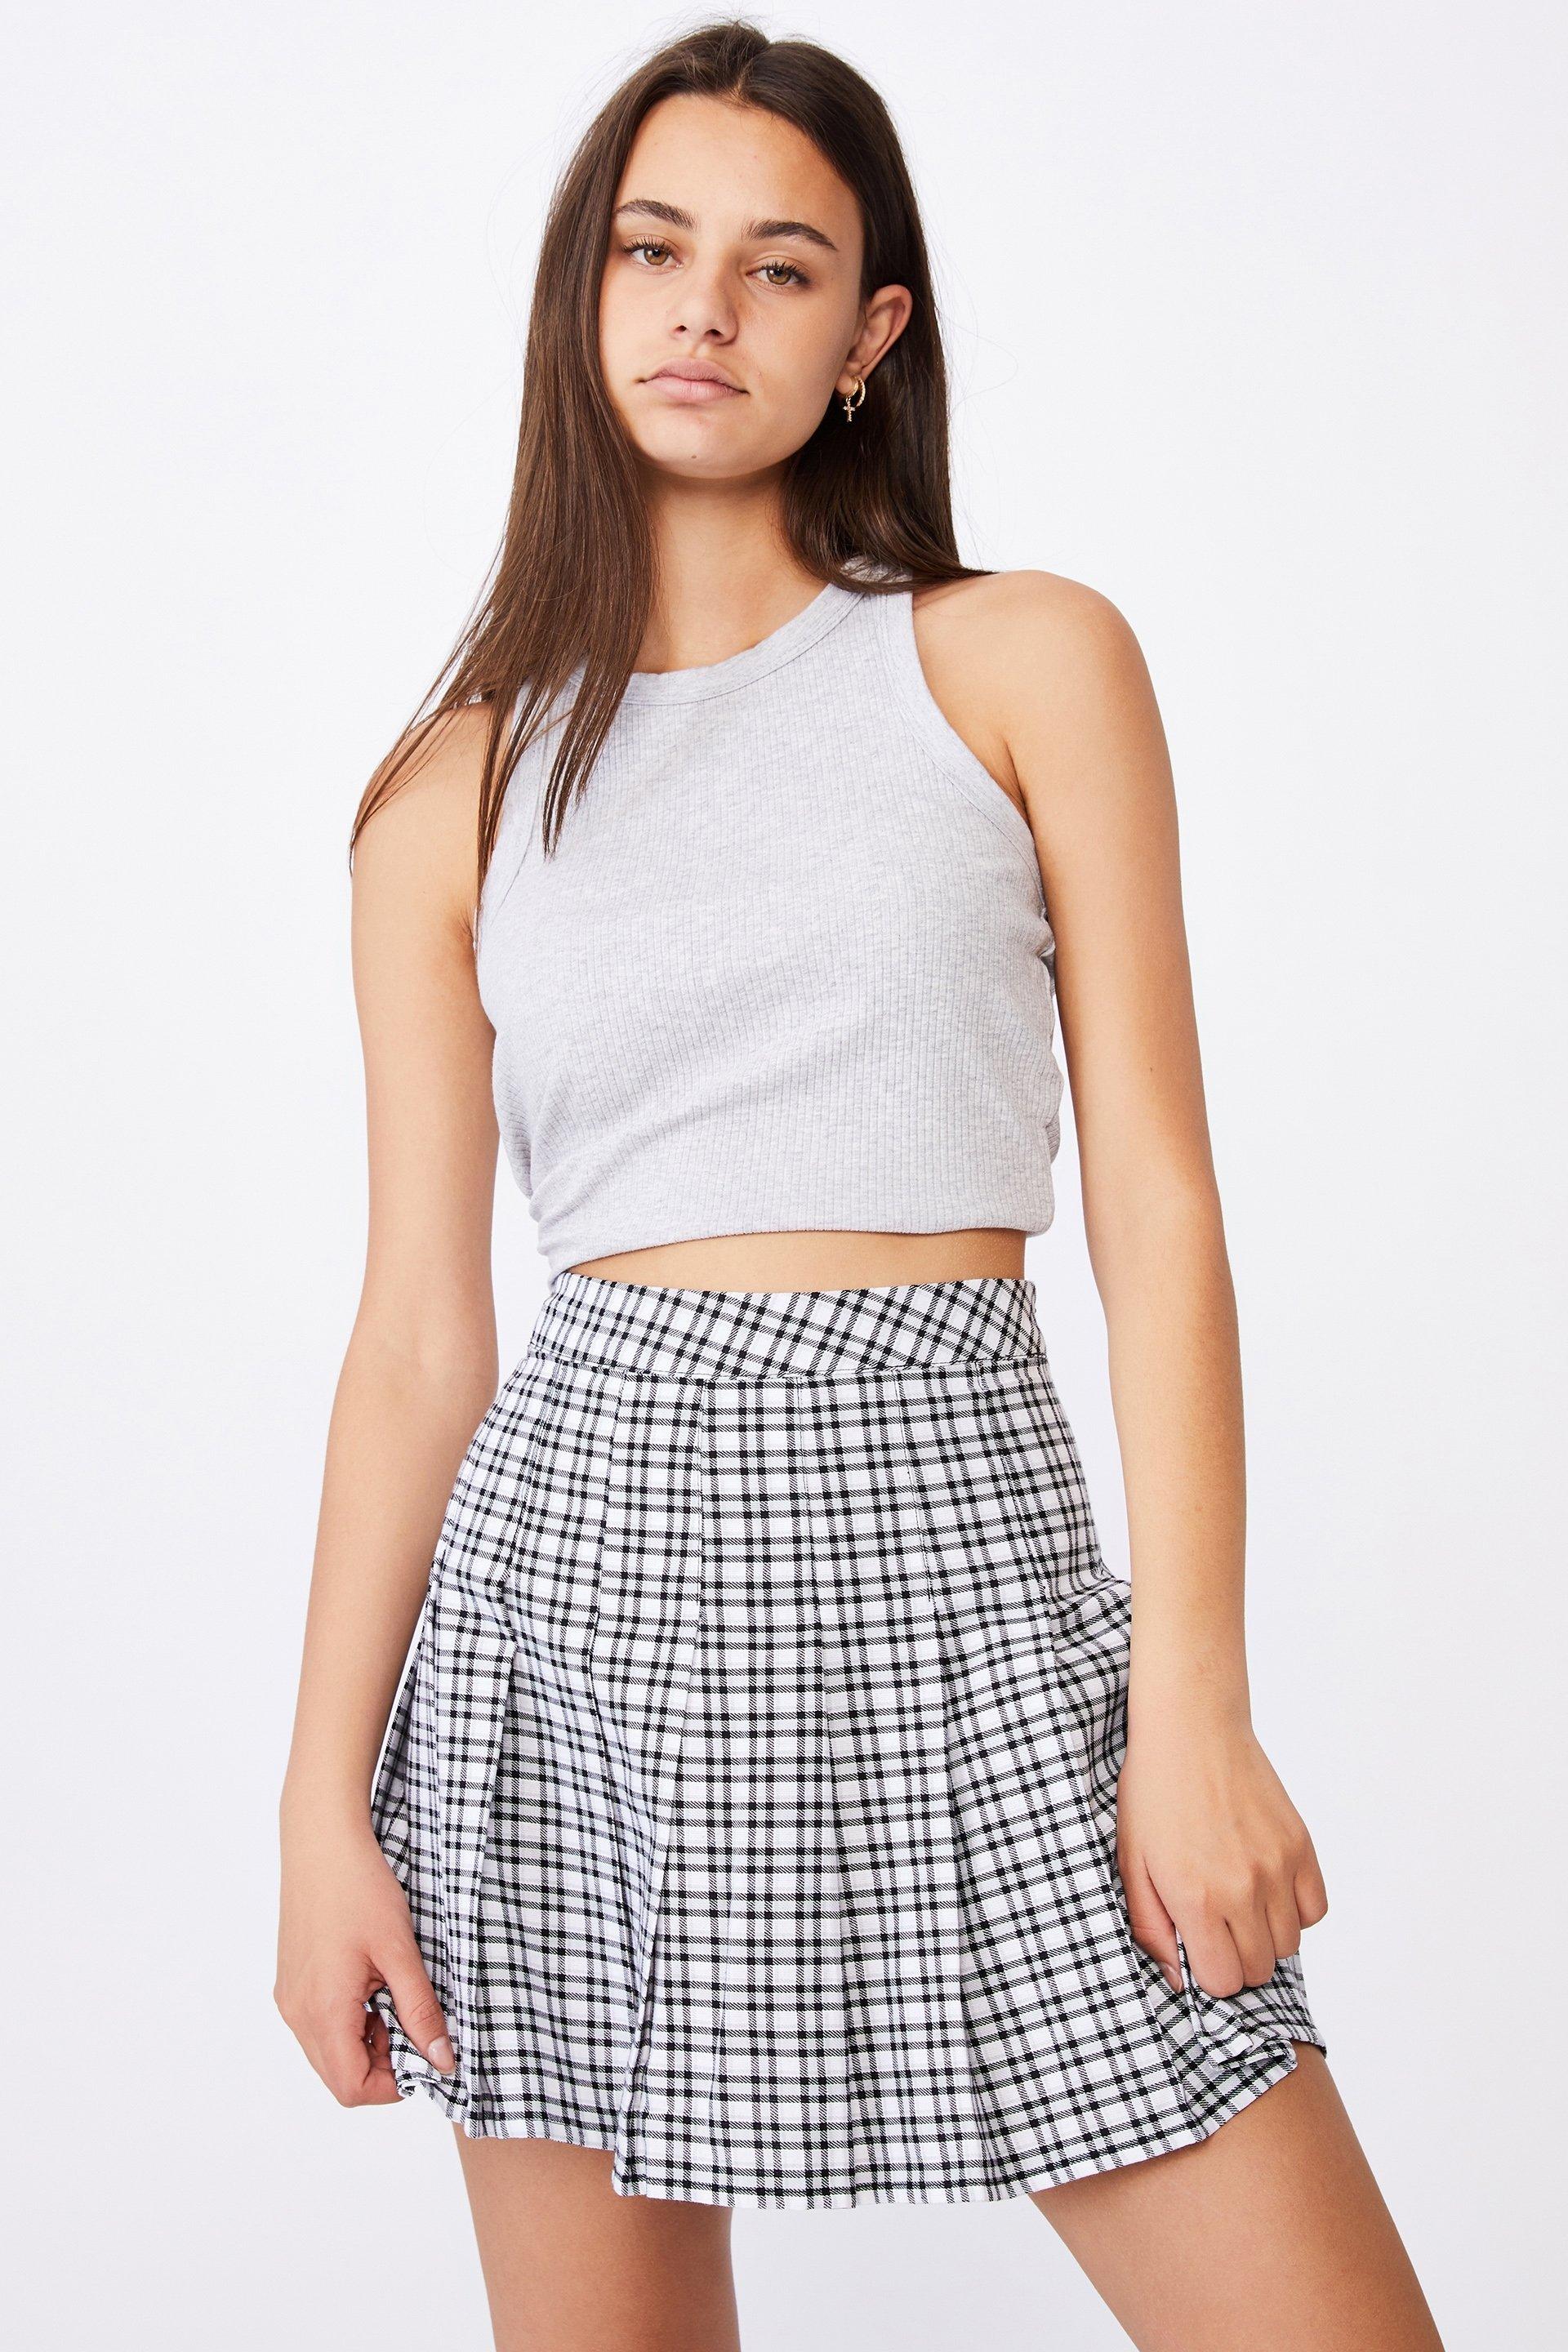 Pleated skirt - stella check Factorie Skirts | Superbalist.com